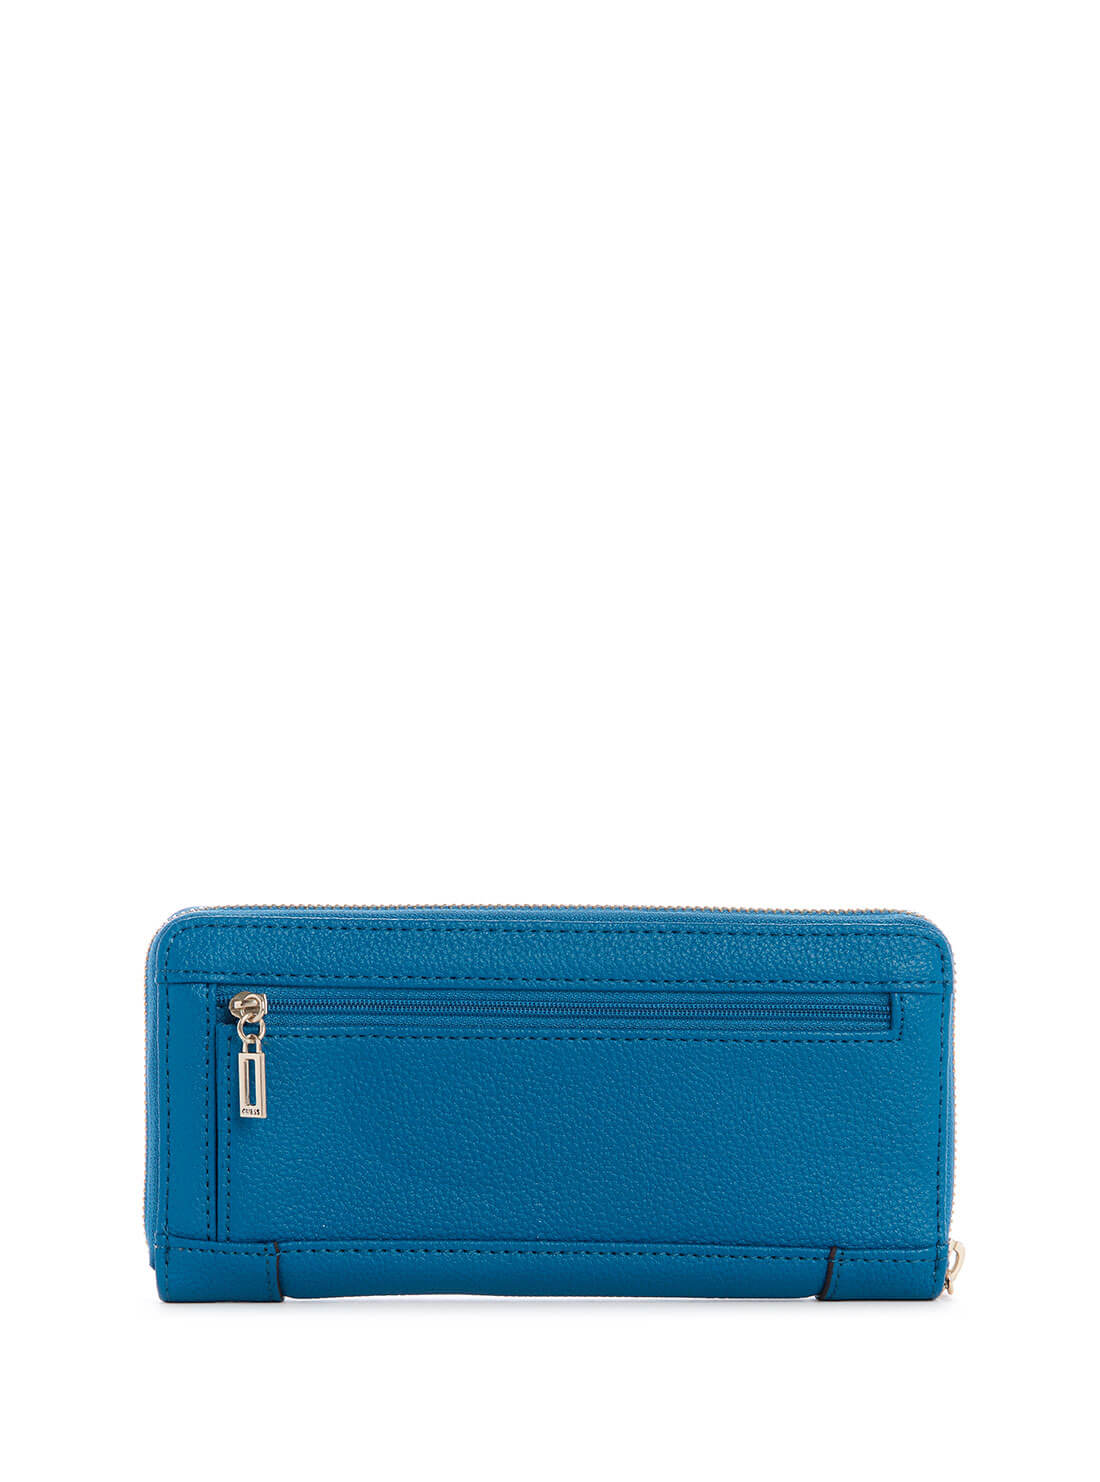 Blue Naya Large Wallet | GUESS Women's Handbags | back view